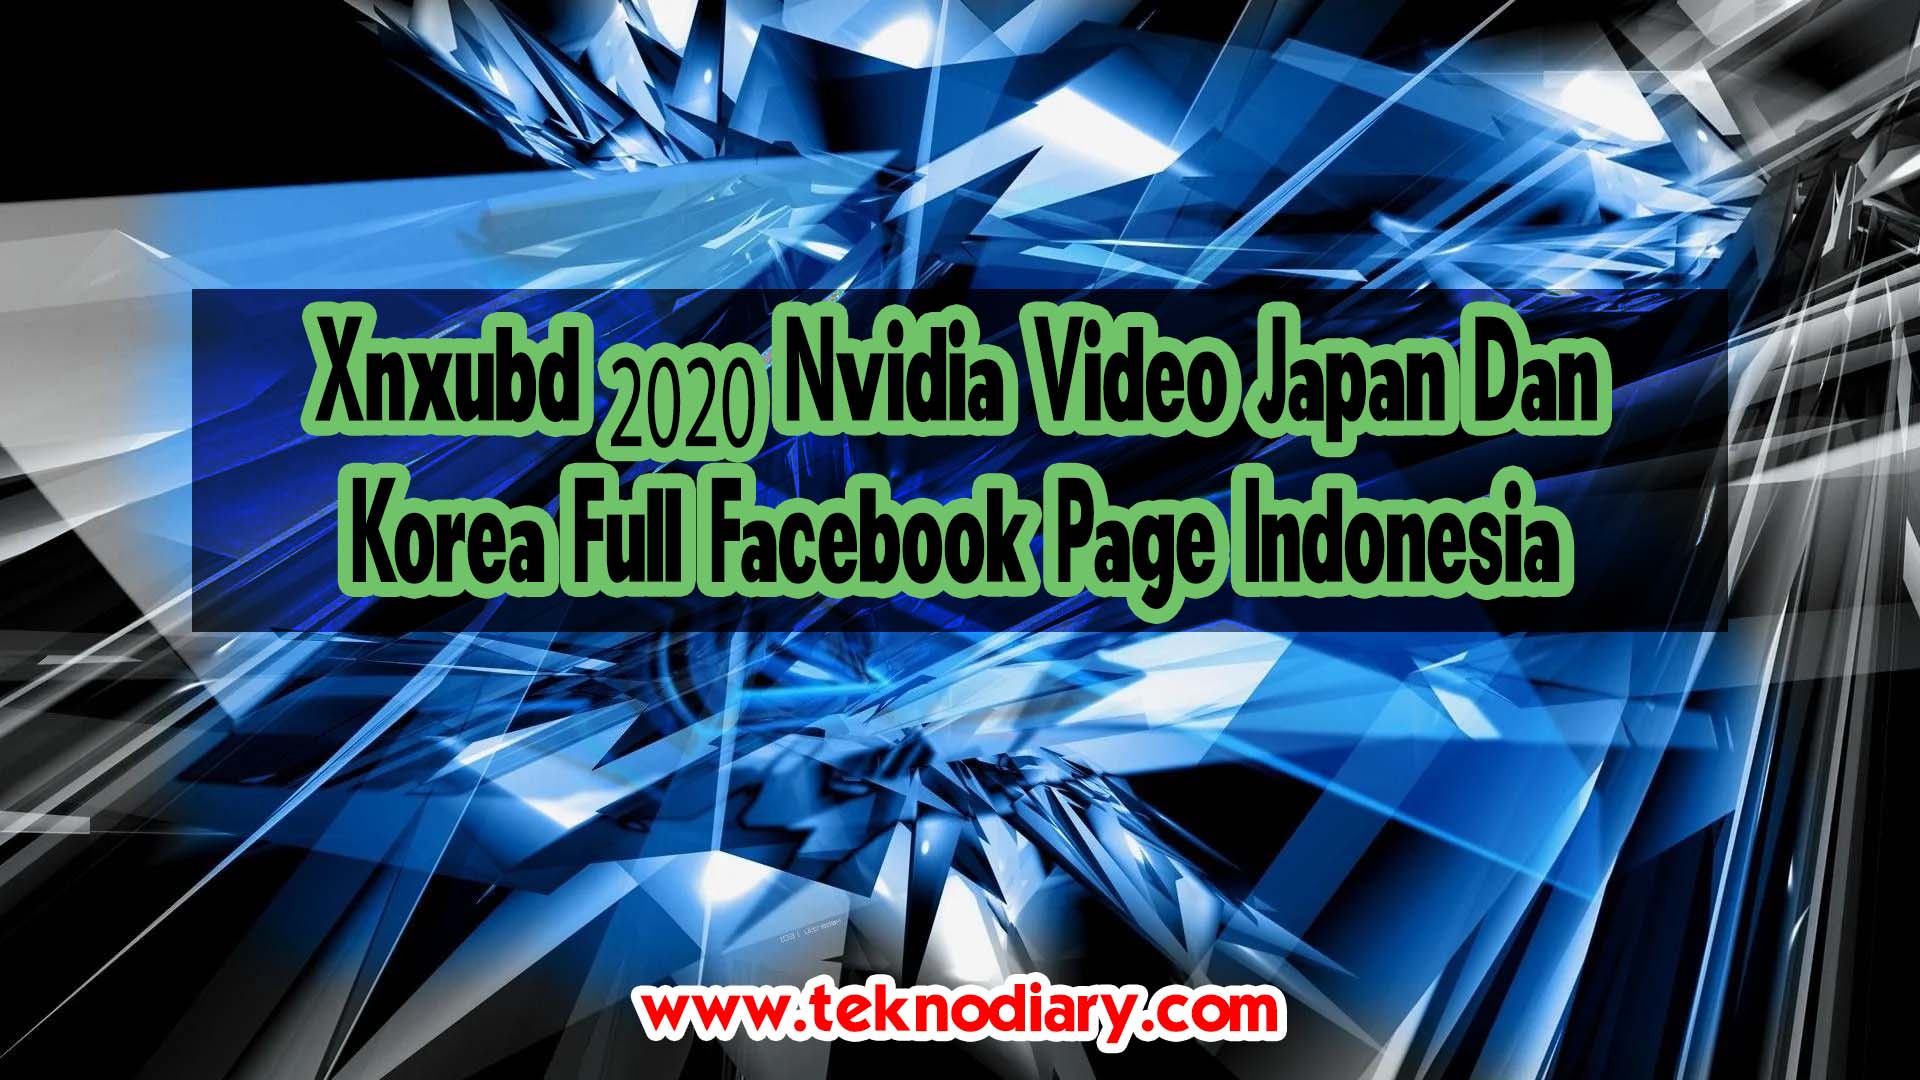 Japan facebook 2020 nvidia video xnxubd Xnxubd 2020